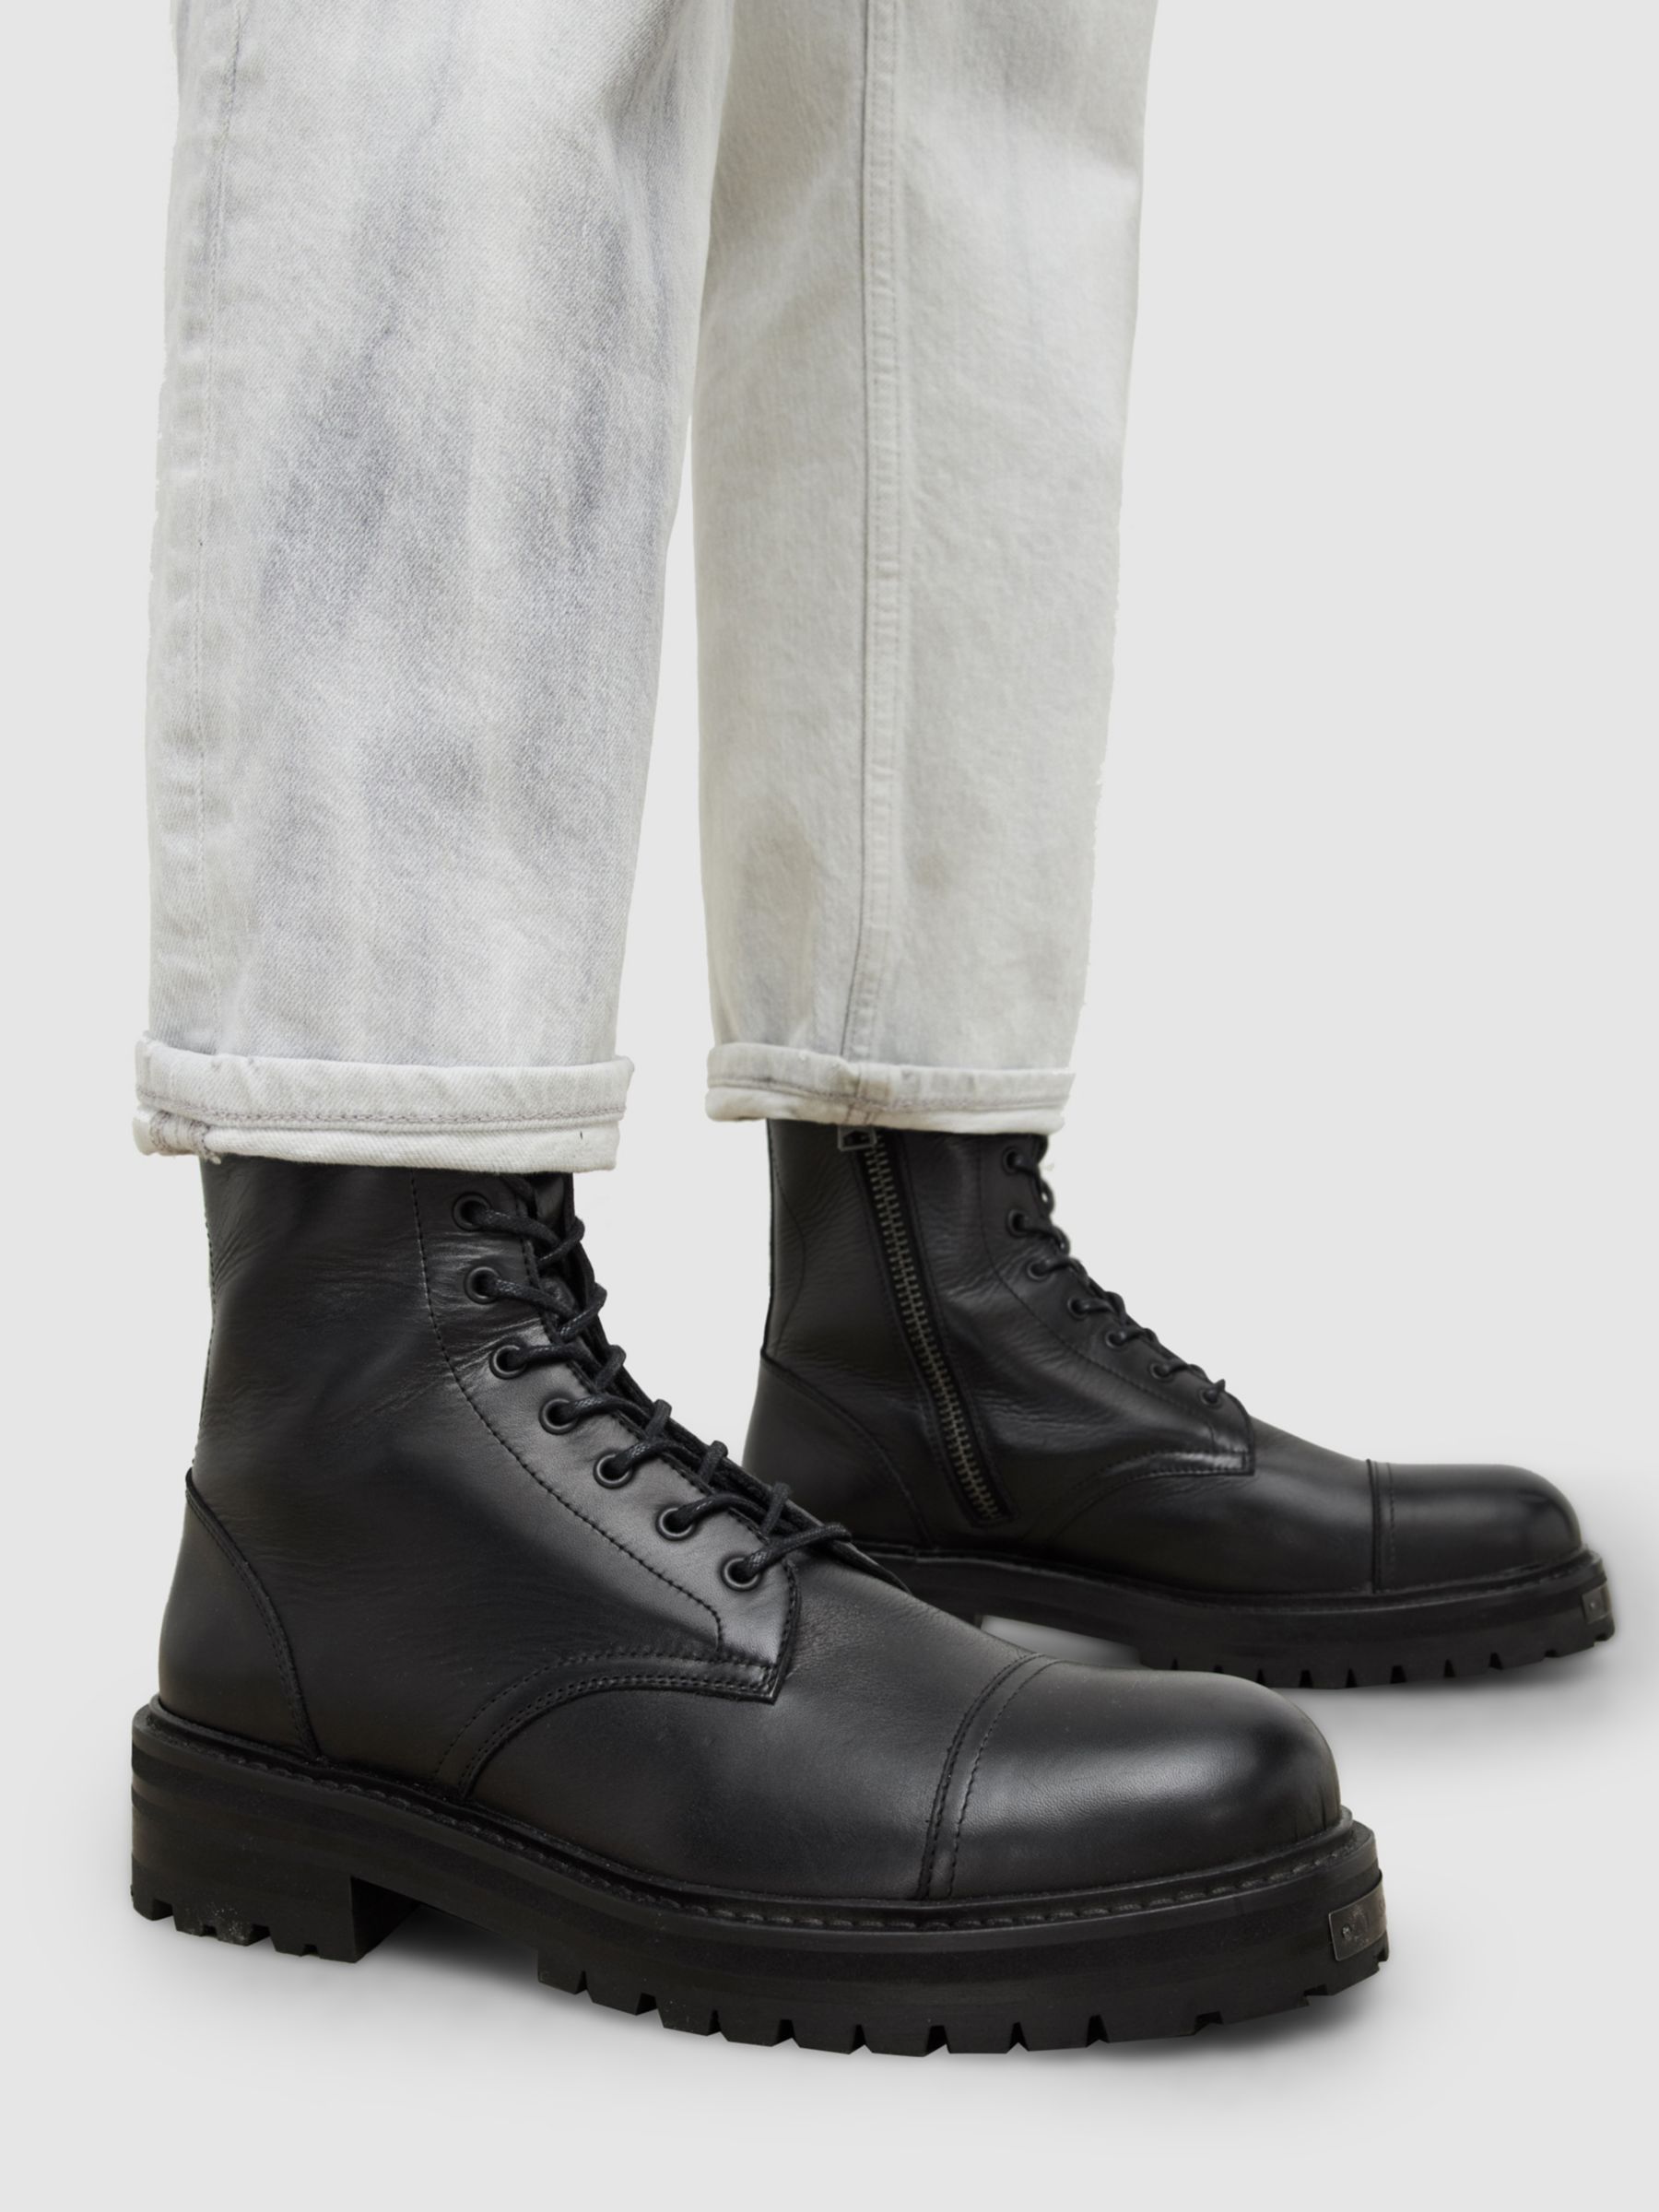 AllSaints Hank Vintage Chunky Sole Ankle Boots, Black at John Lewis ...